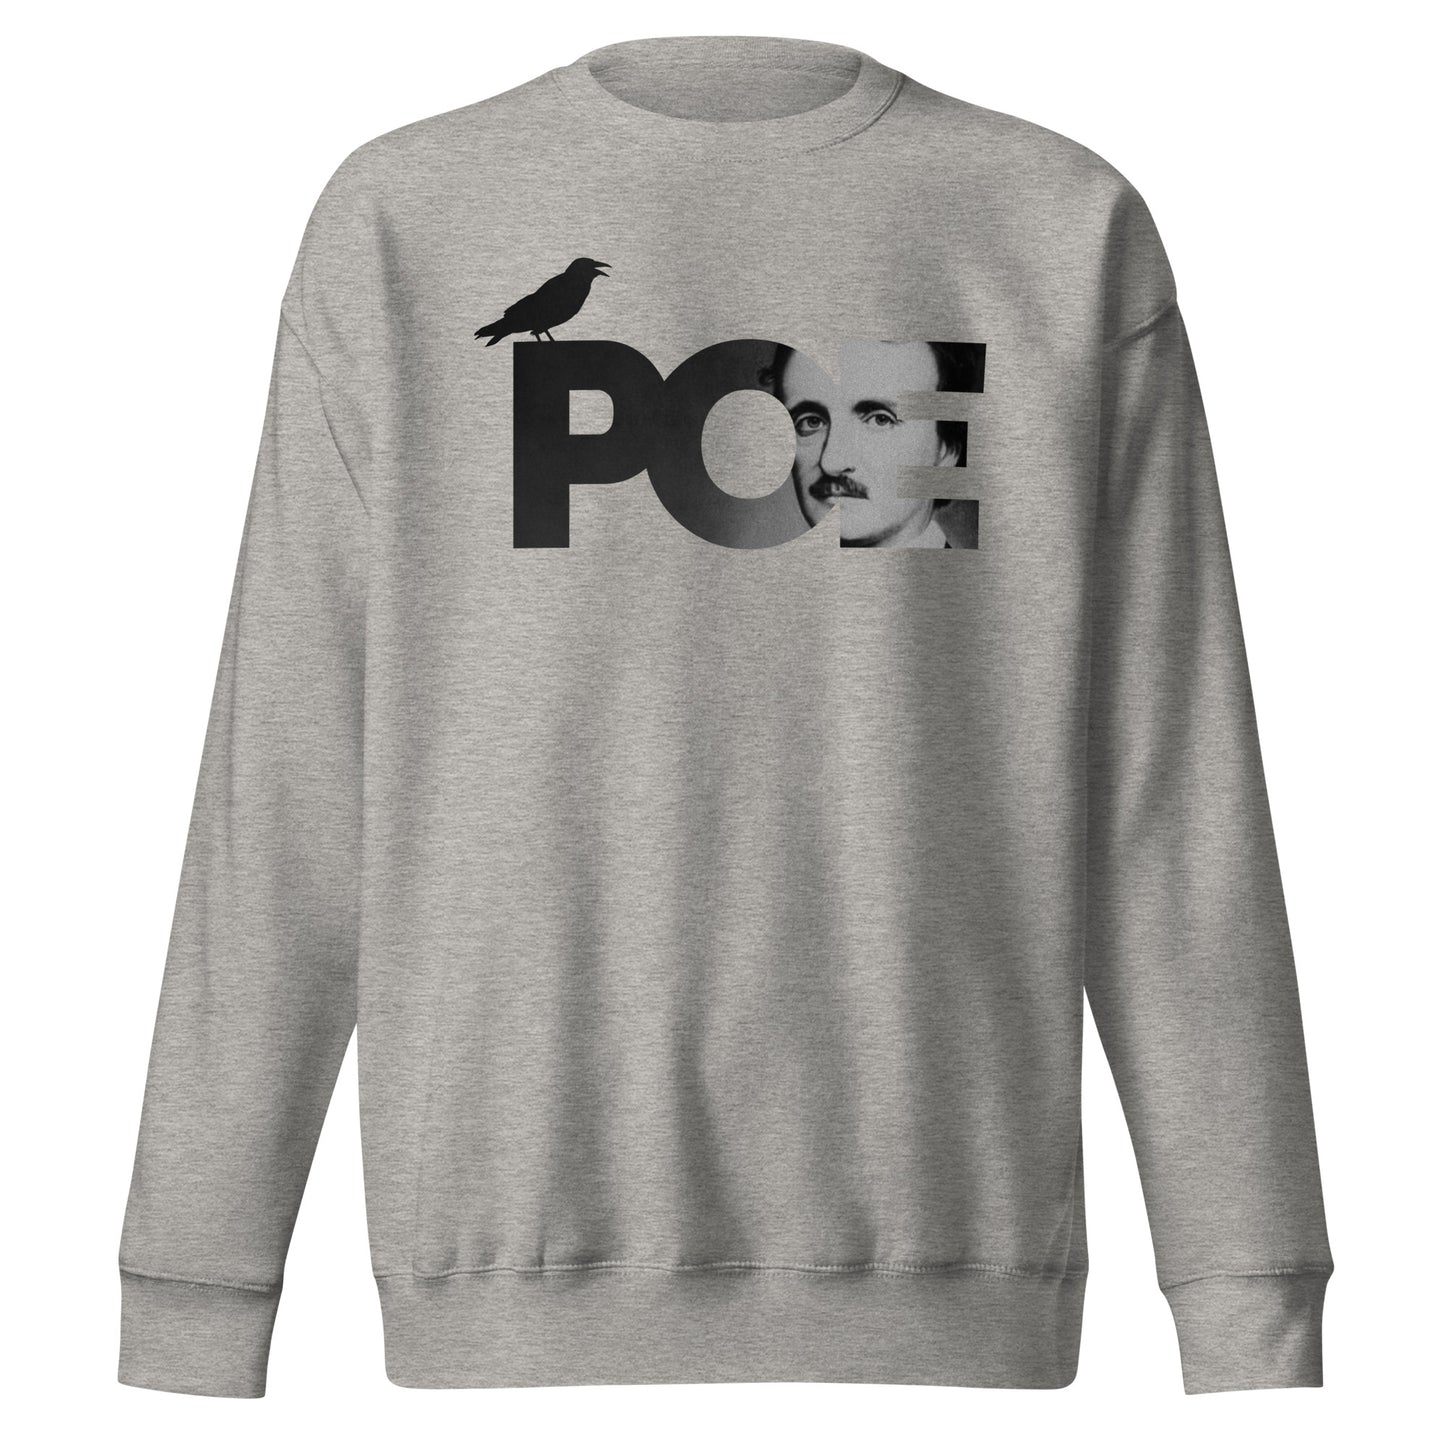 Men's Edgar Allan Poe "Poe" Unisex Premium Sweatshirt - Carbon Grey Front